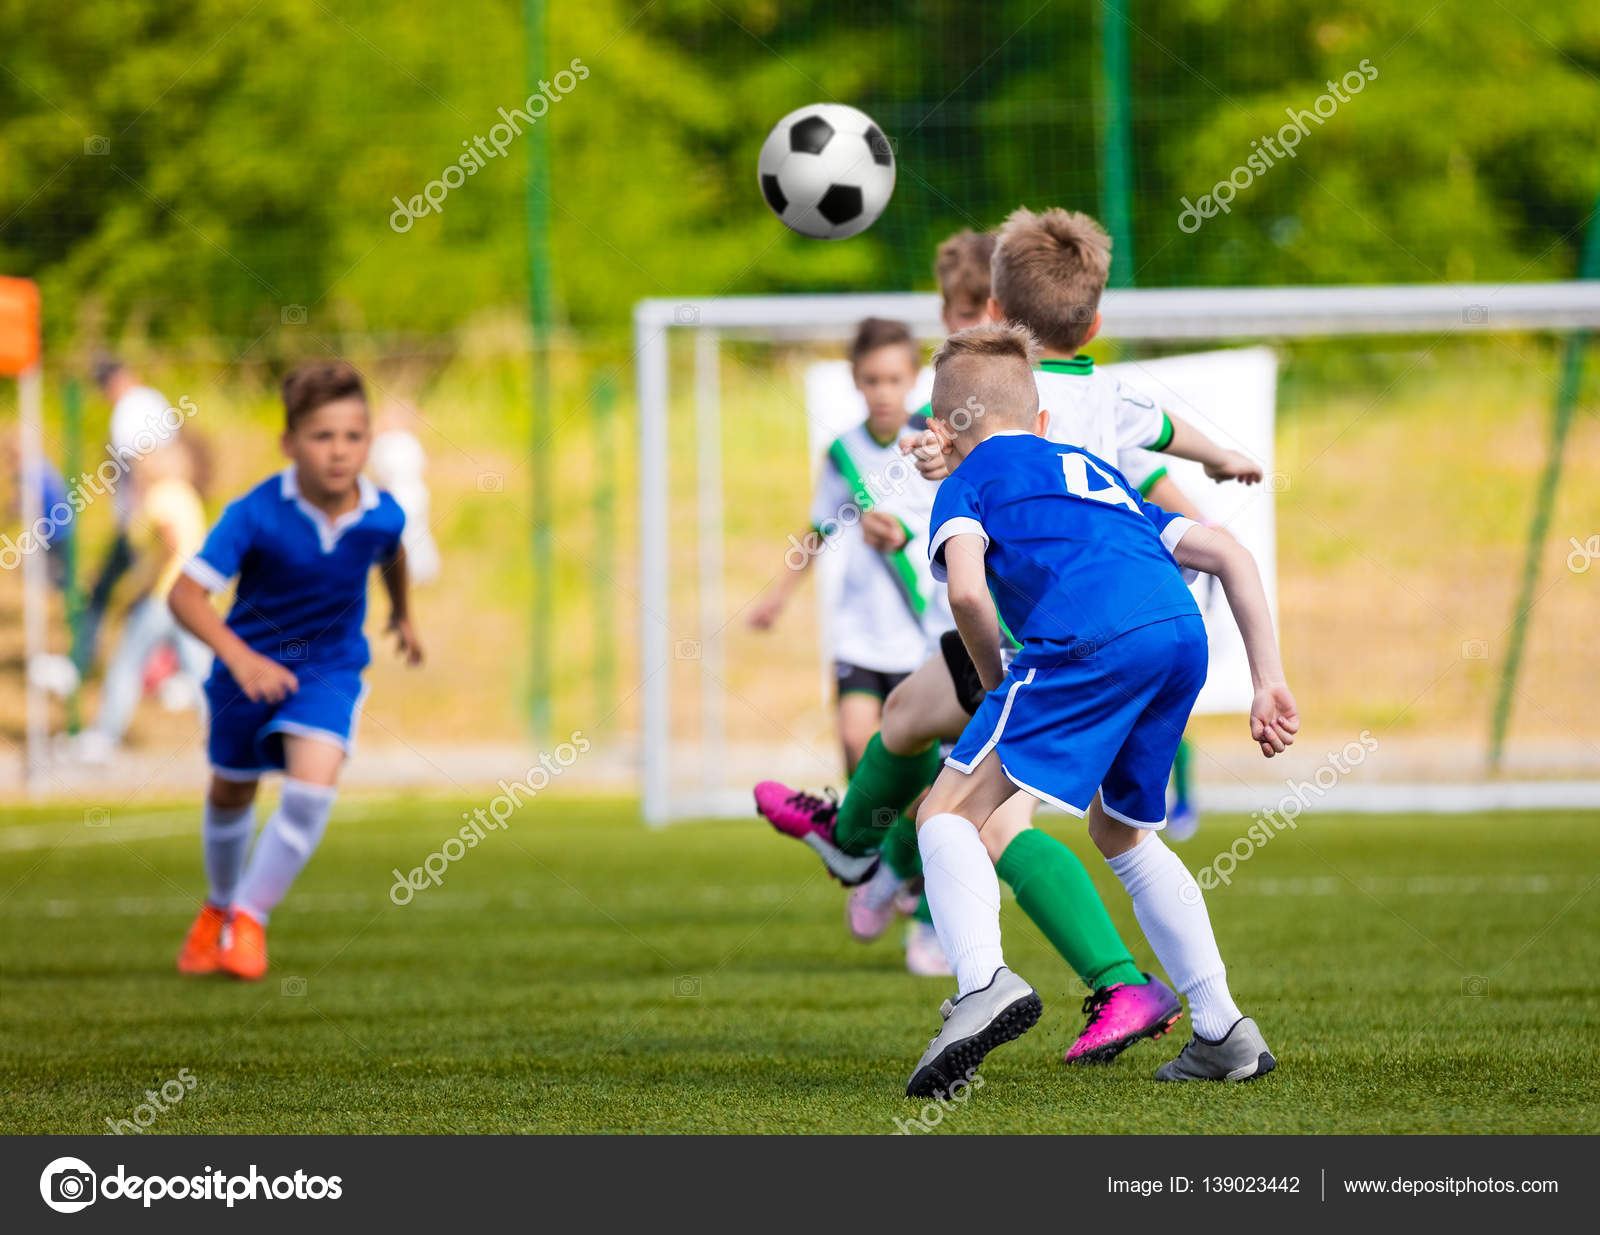 Kids Soccer Game 